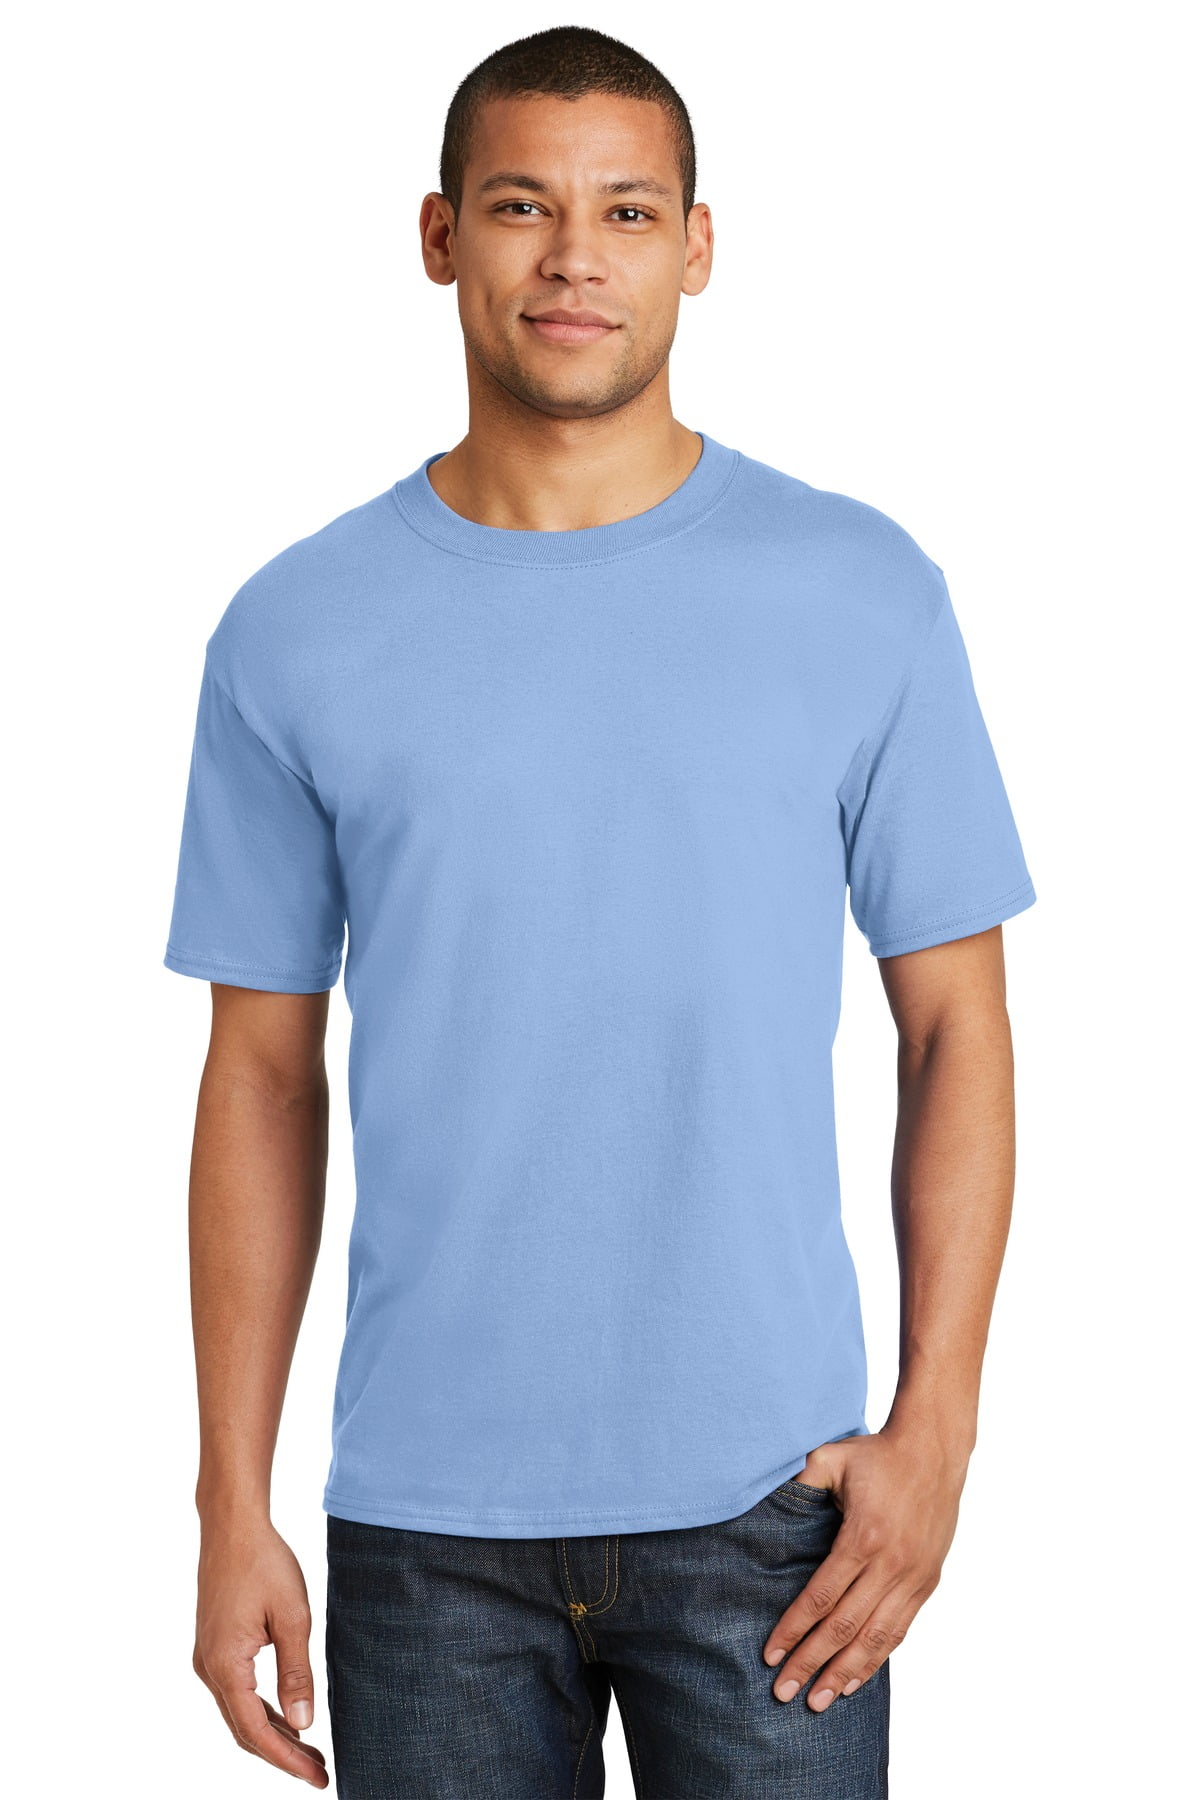 Hanes Beefy-T 100% Cotton T-Shirt - Walmart.com